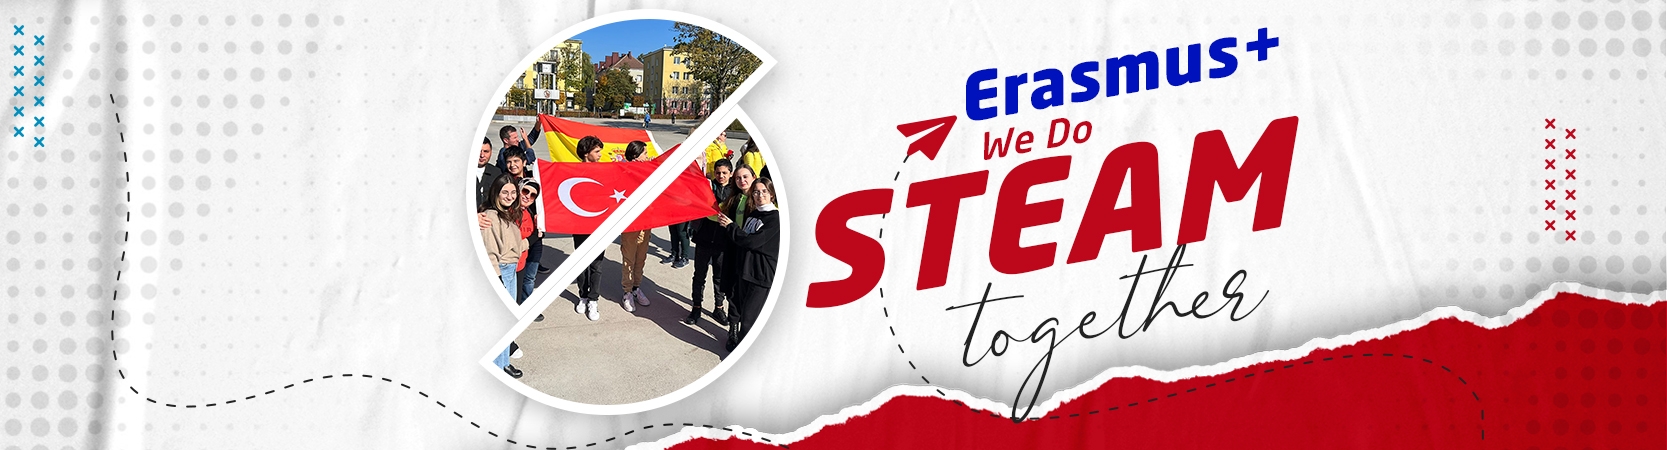 Erasmus Projesi We Do STEAM Together